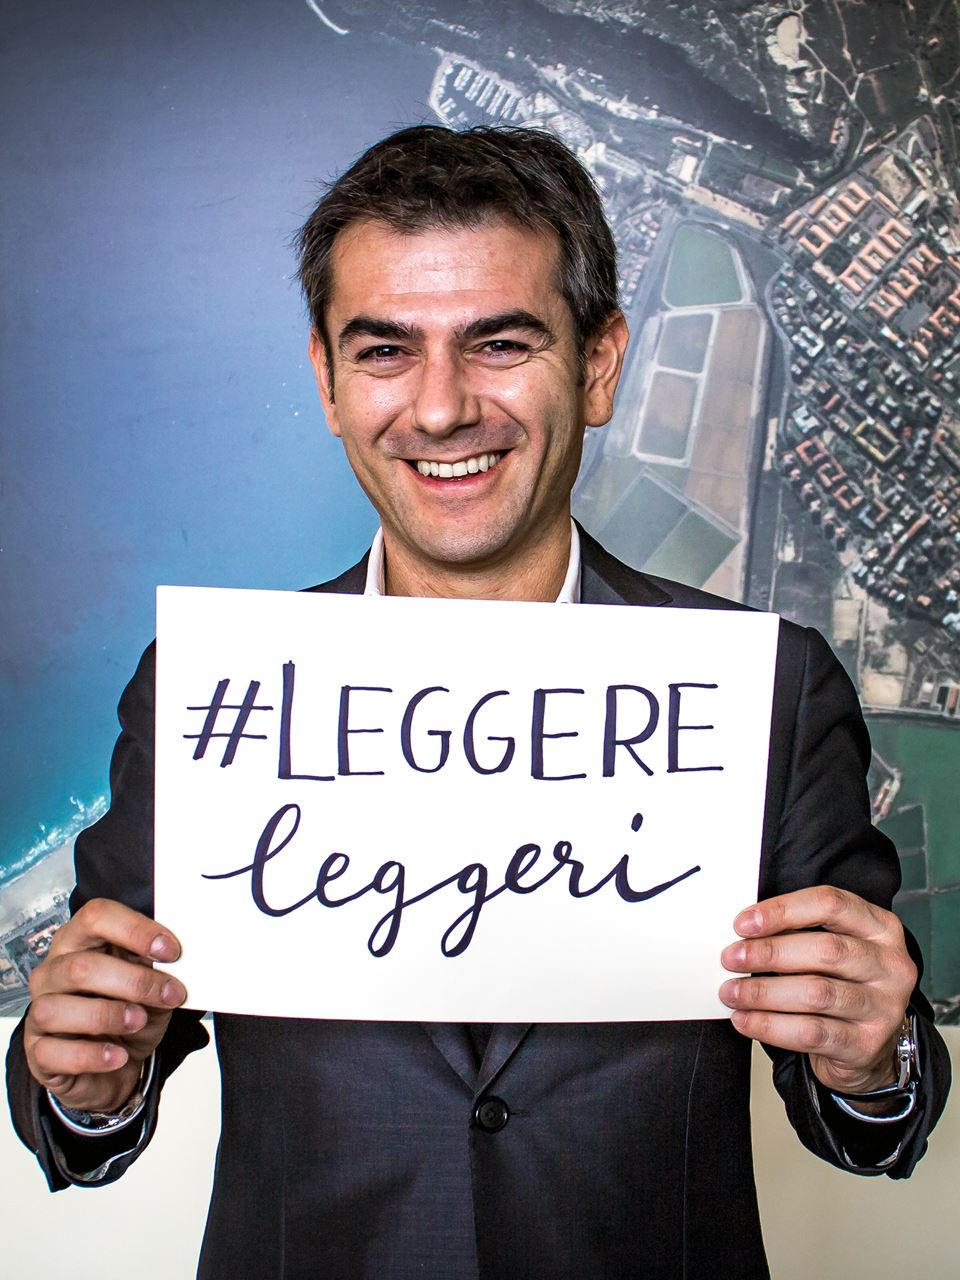 #LeggereLeggeri - Il Sindaco Massimo Zedda